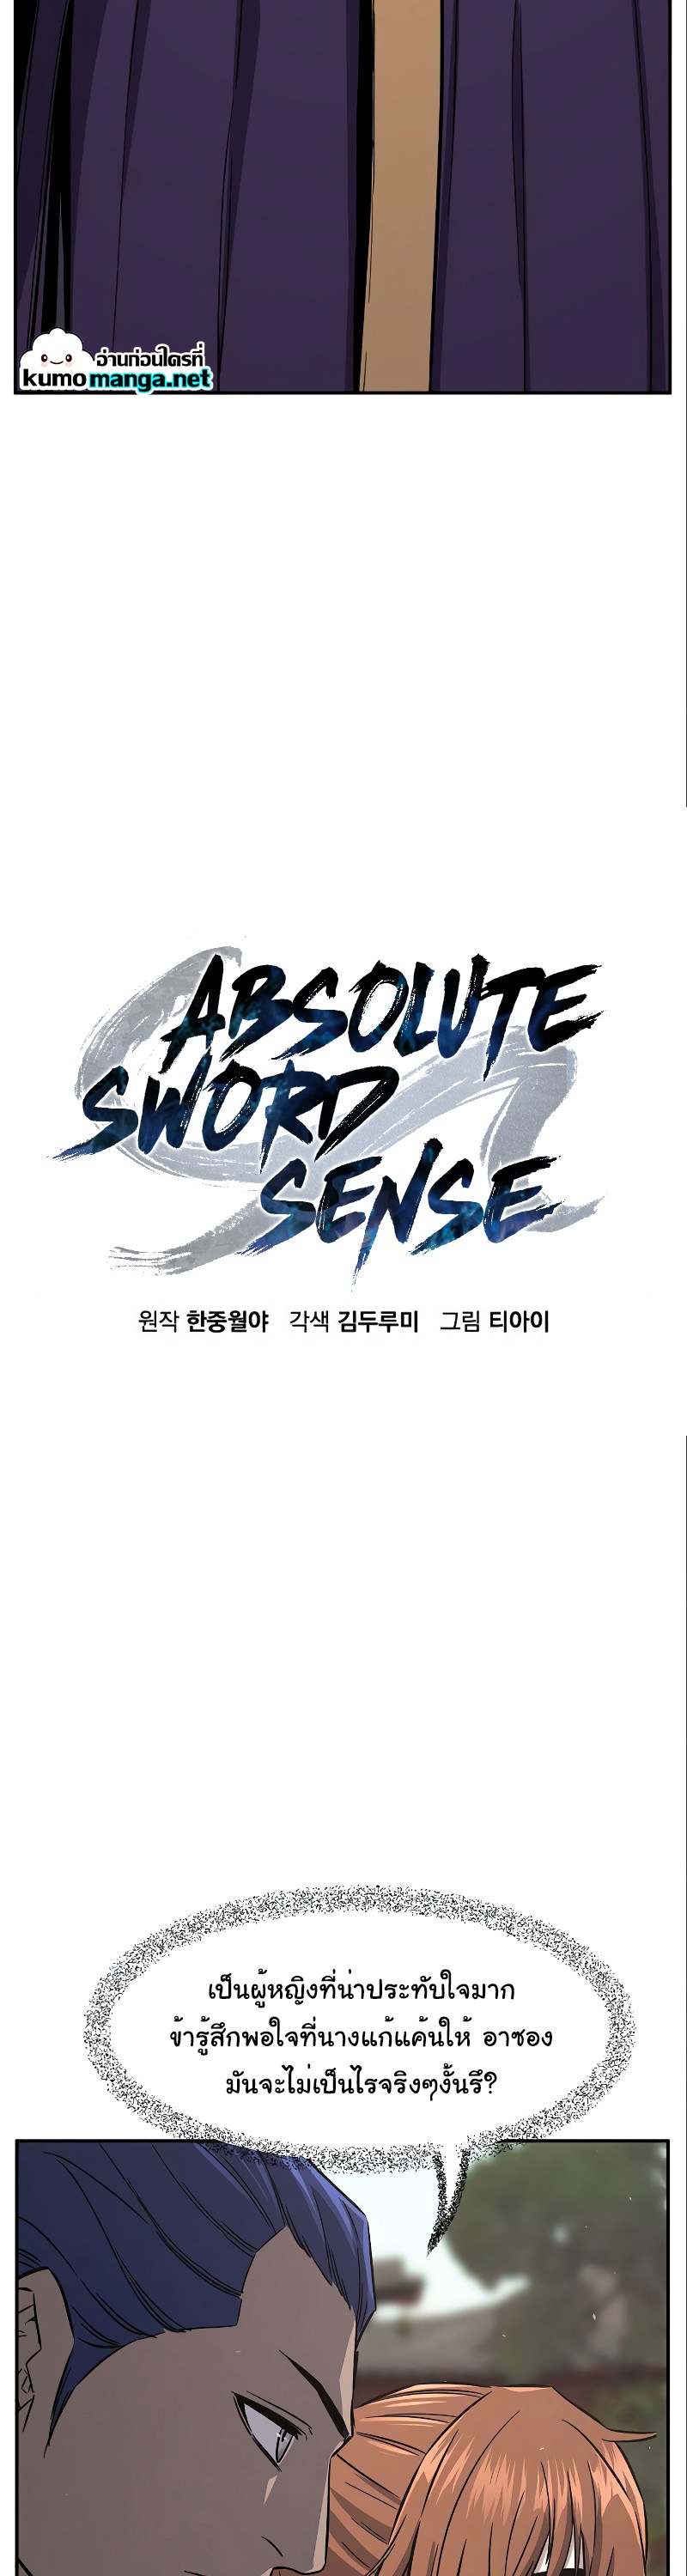 Absolute Sword Sense 56 (11)